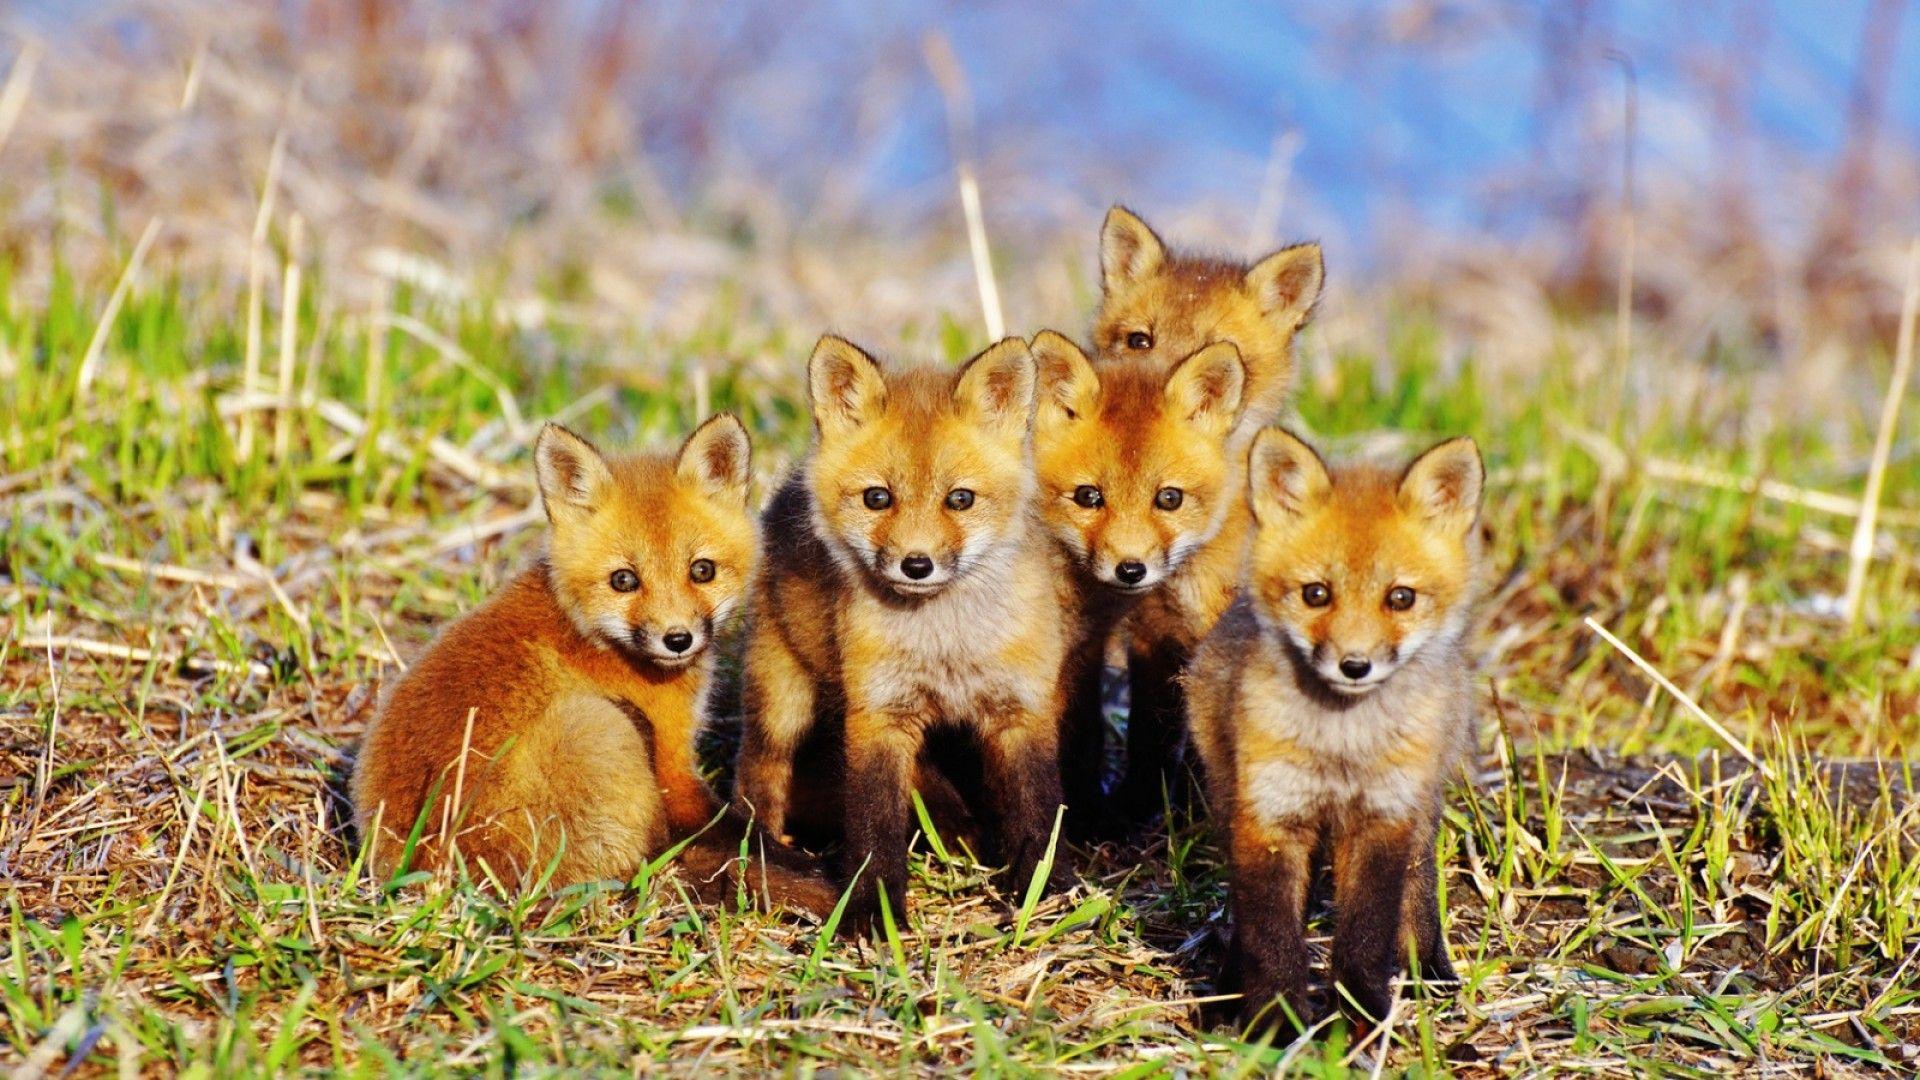 Fox Animal Wallpaper, 48 Widescreen HD Wallpaper of Fox Animal